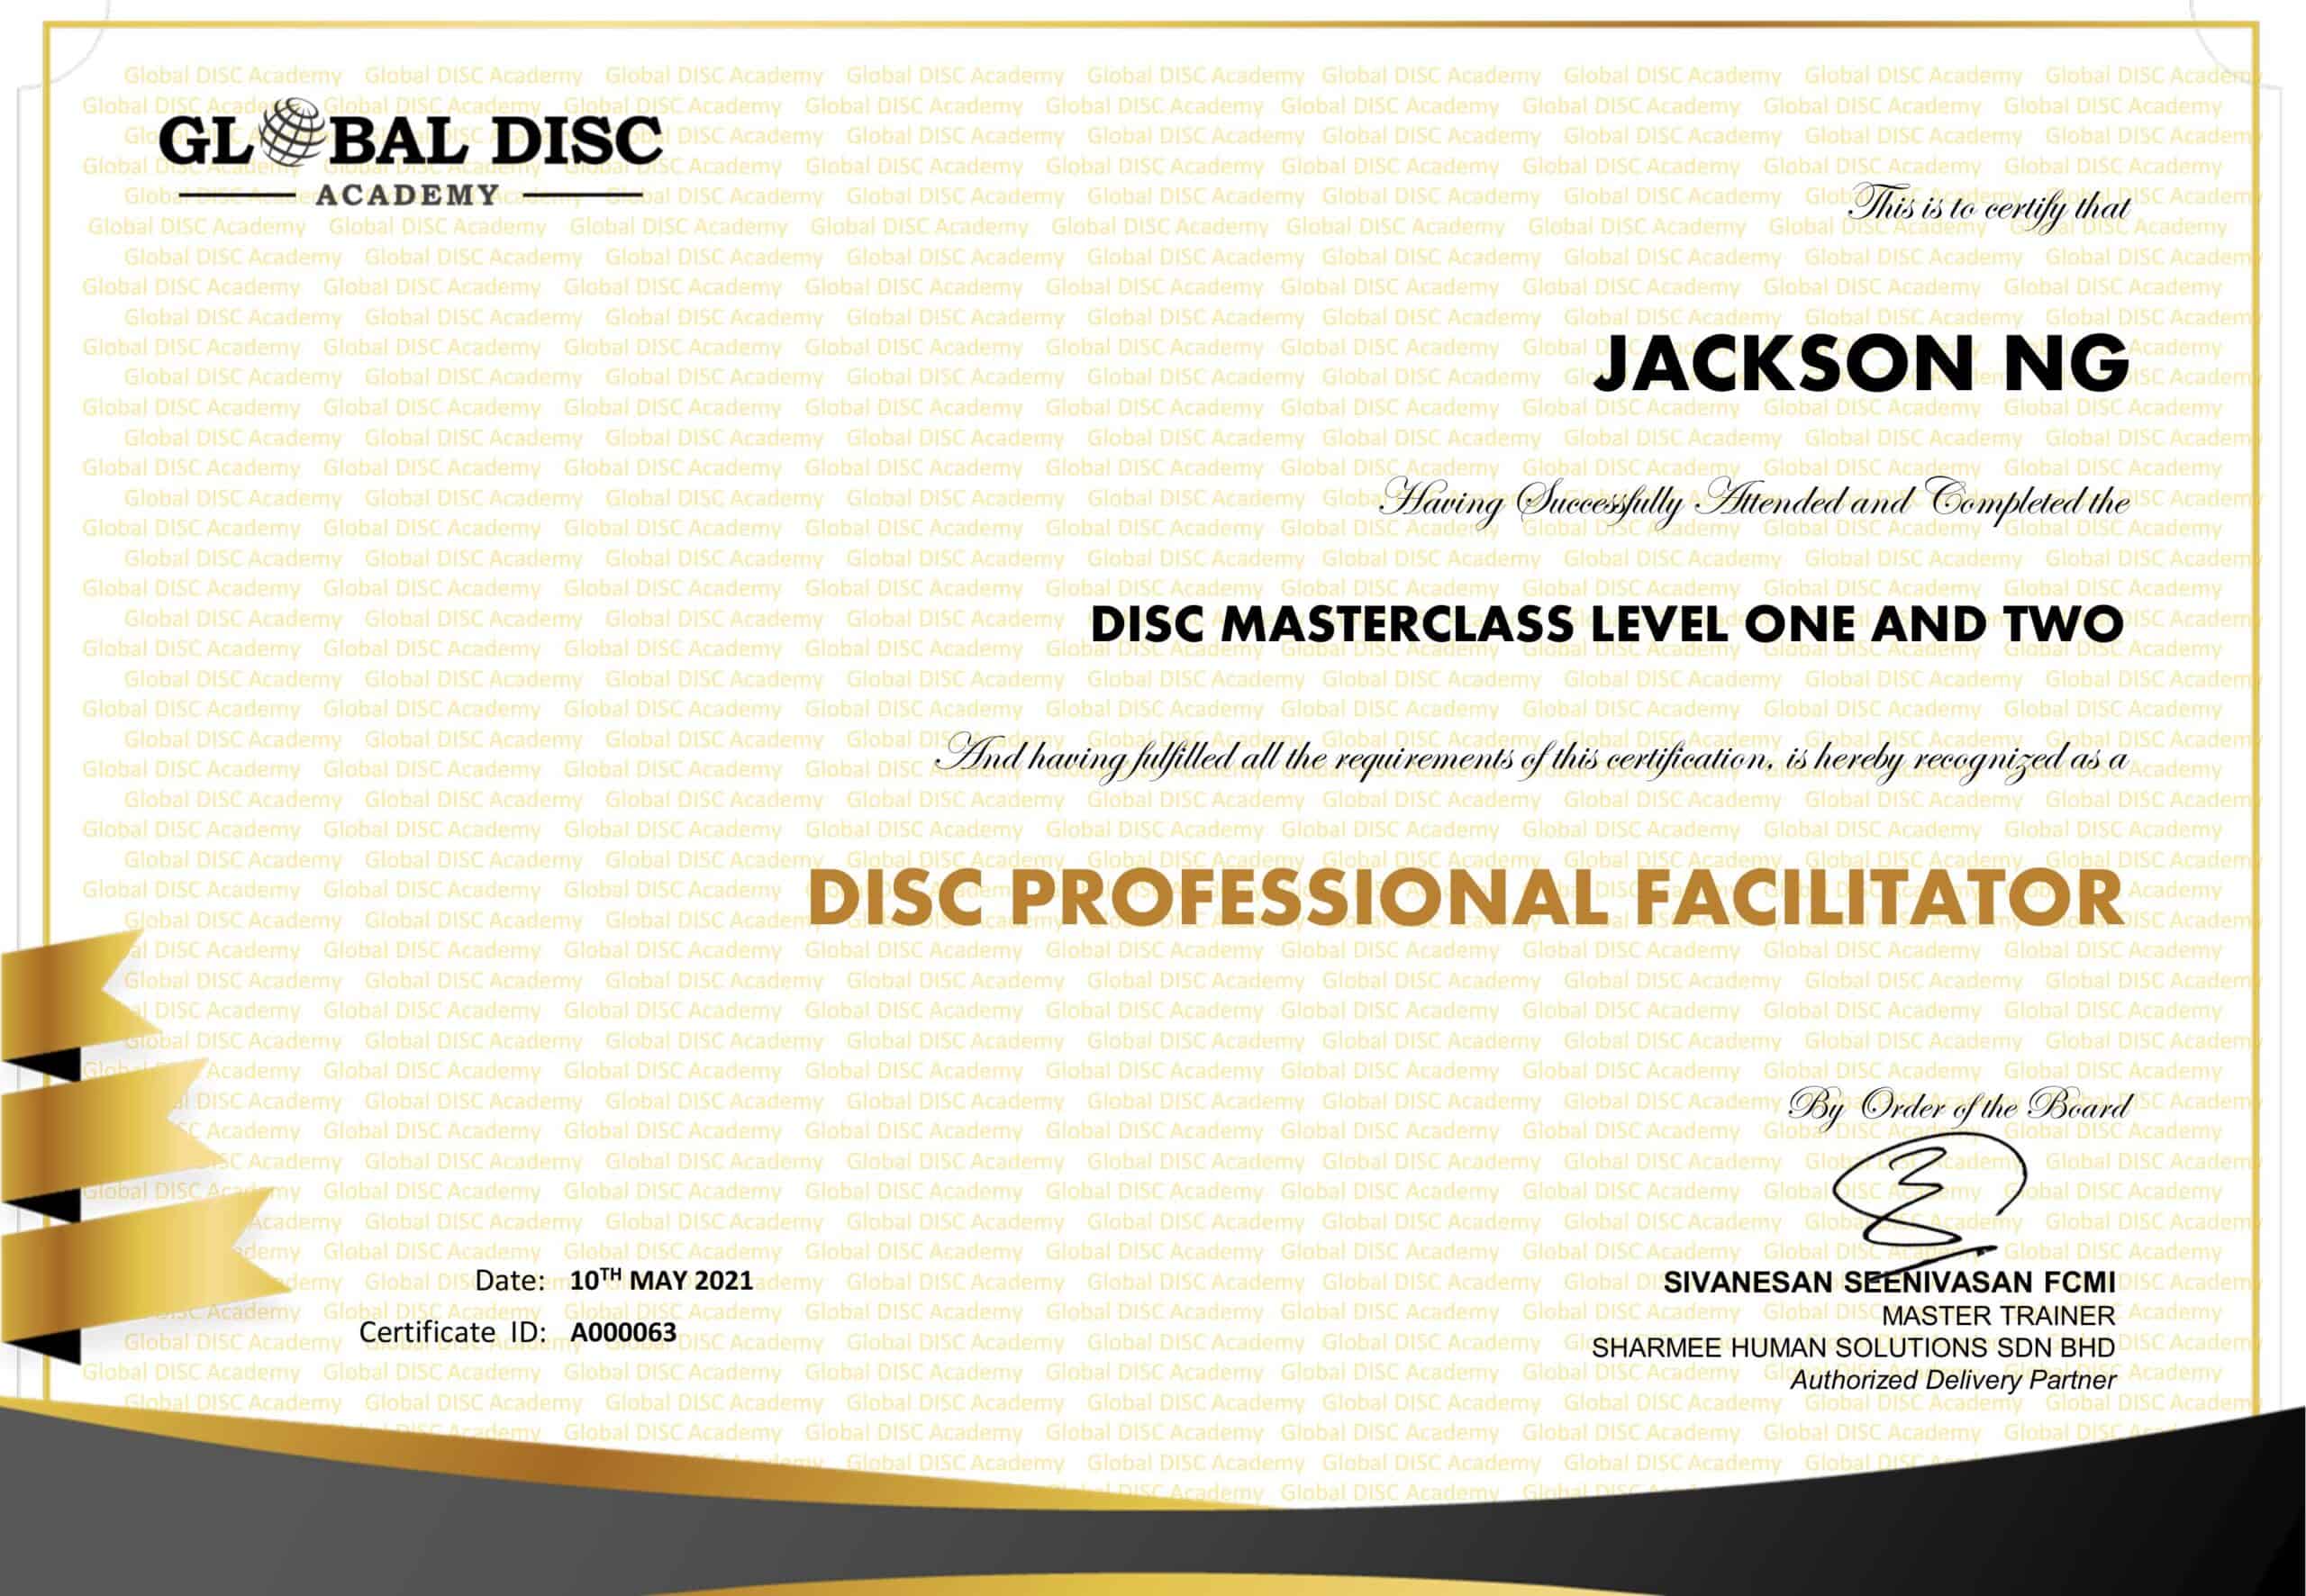 About Jackson Ng - Certificate - A000063 L2-02 JACKSON NG